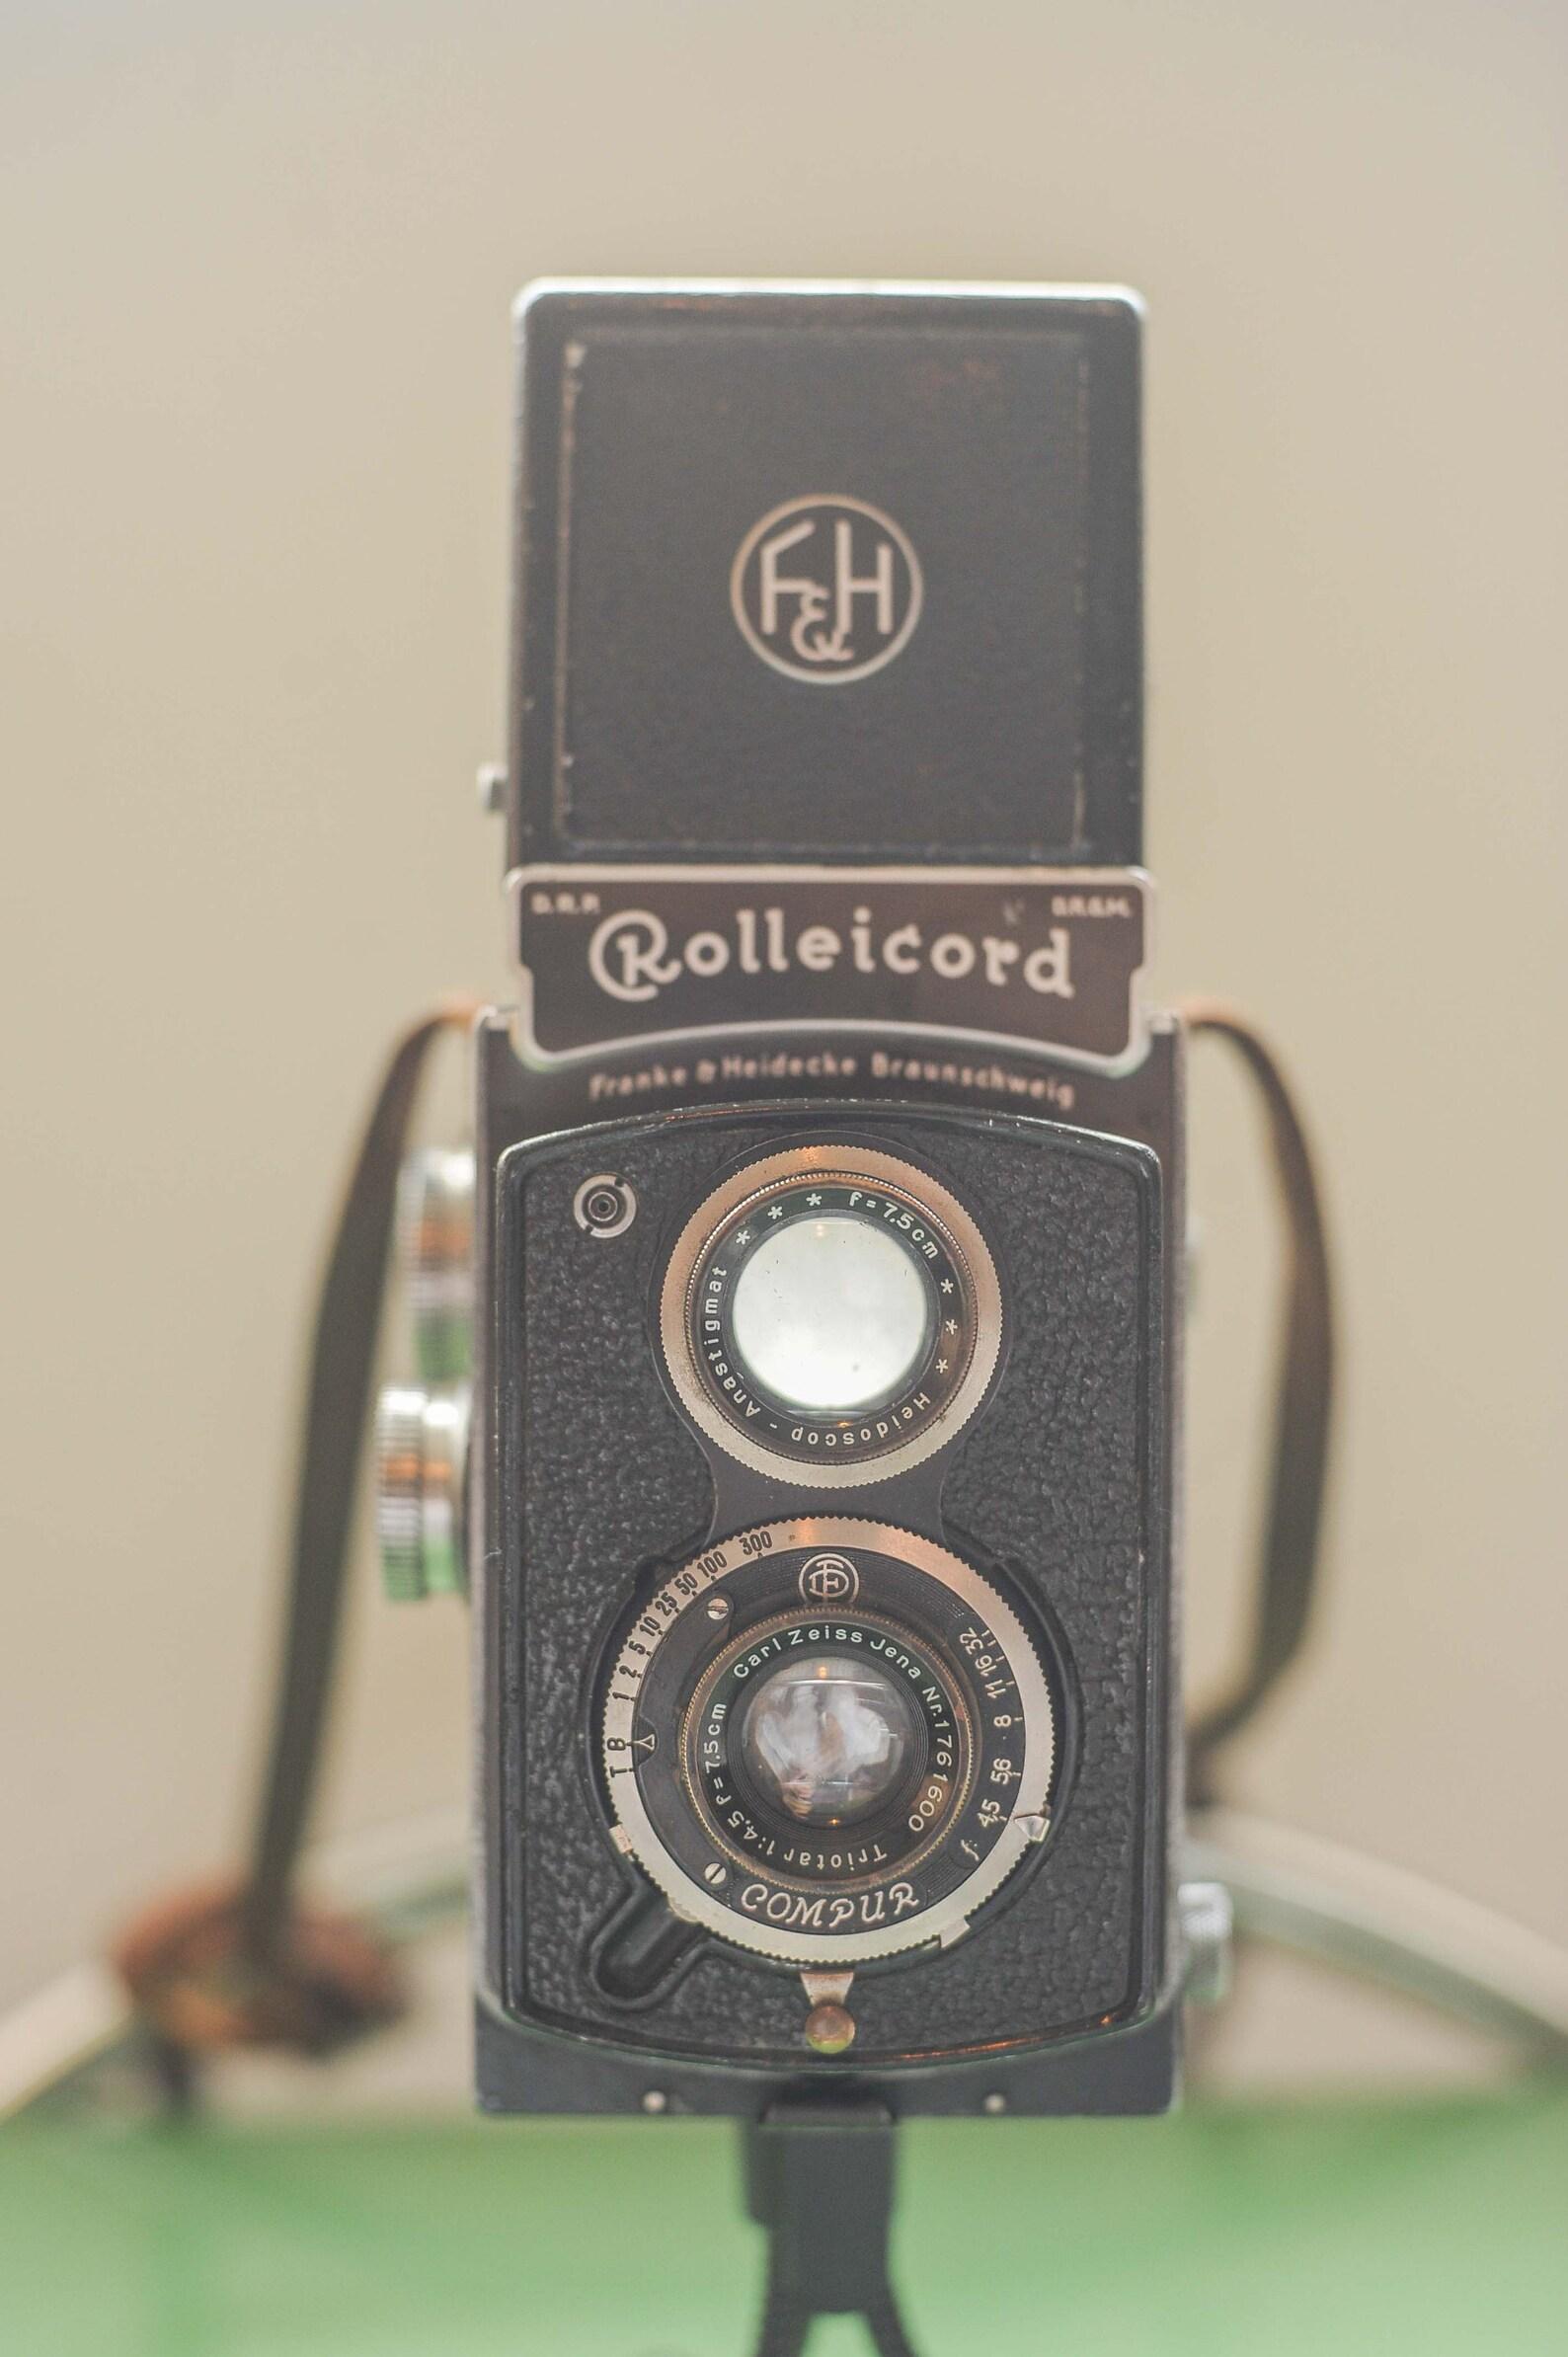 Franke & Heidecke Rolleicord Ia Model 1 - Model K3 - 520 Twin lens Reflex Camera Camera 120 Sheet Film Camera Made In Germany 1936-1937


Highslide JMars 1936 - mai 1937, 9 459 pièces.
Numéros de série : 1.760.000 - 1.947.000, gravés dans l'objectif